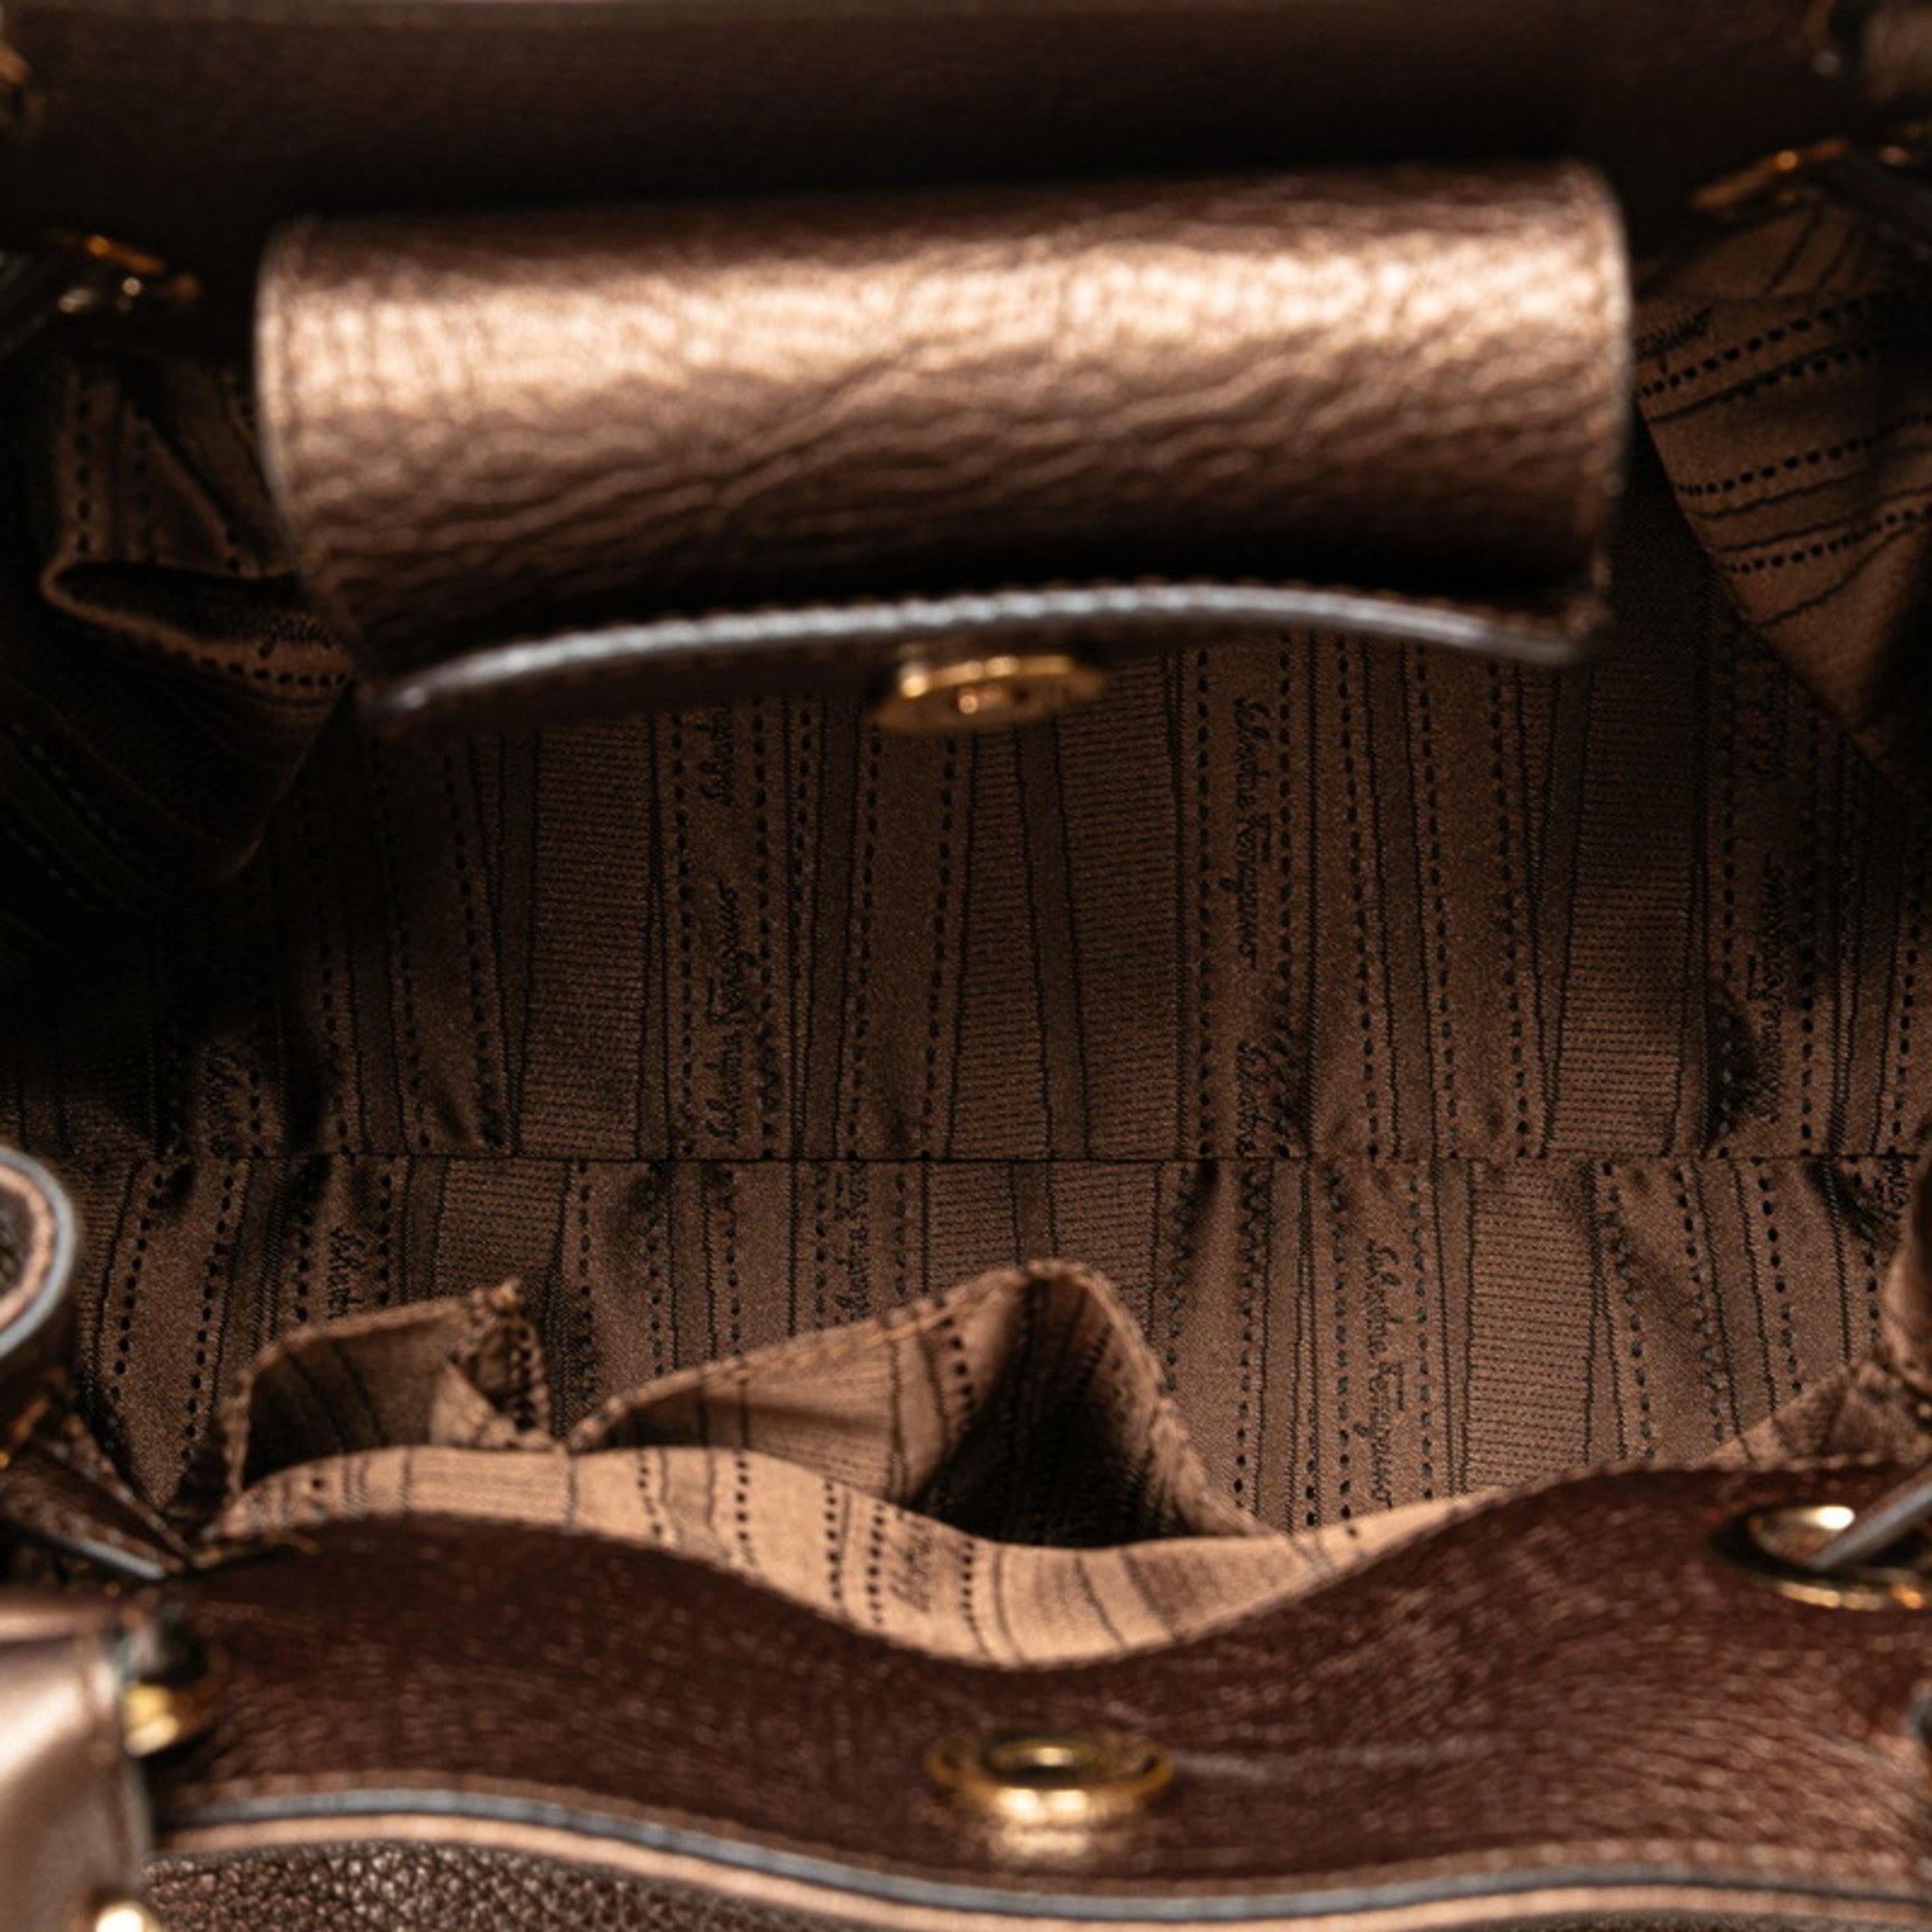 Salvatore Ferragamo Gancini Tote Bag Shoulder AB-21B928 Brown Leather Women's